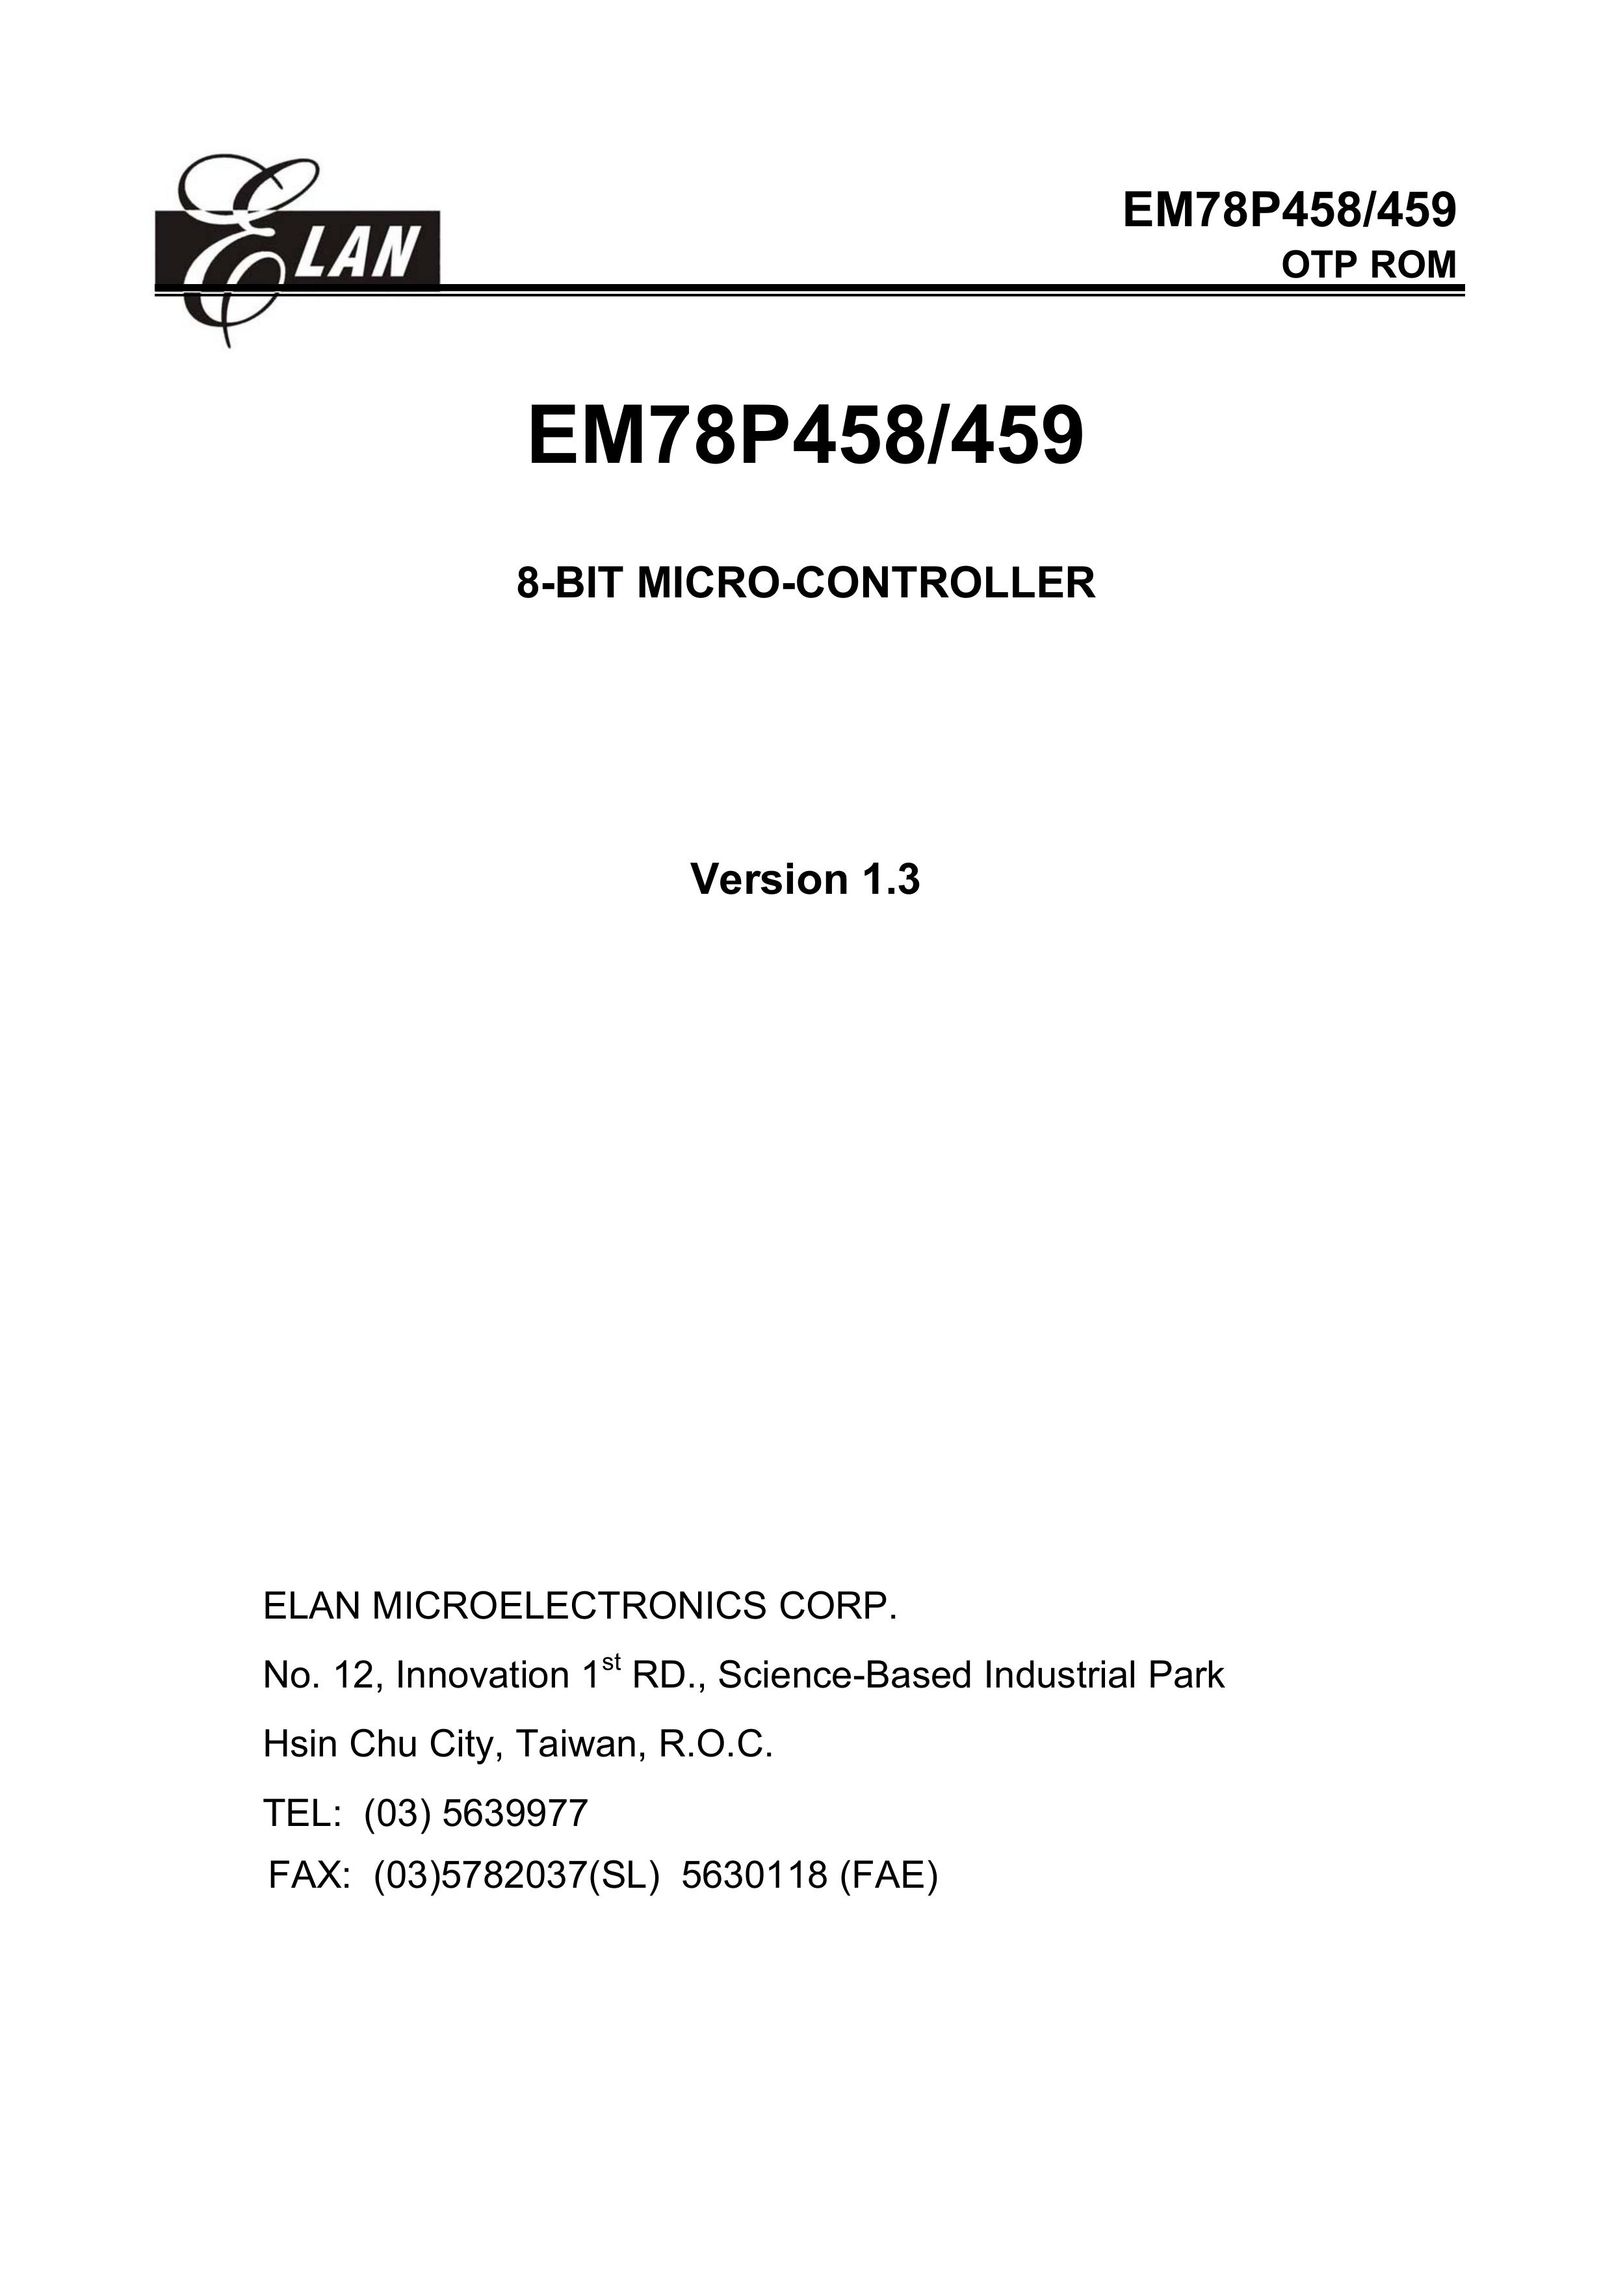 ELAN Home Systems EM78P459AM Network Card User Manual